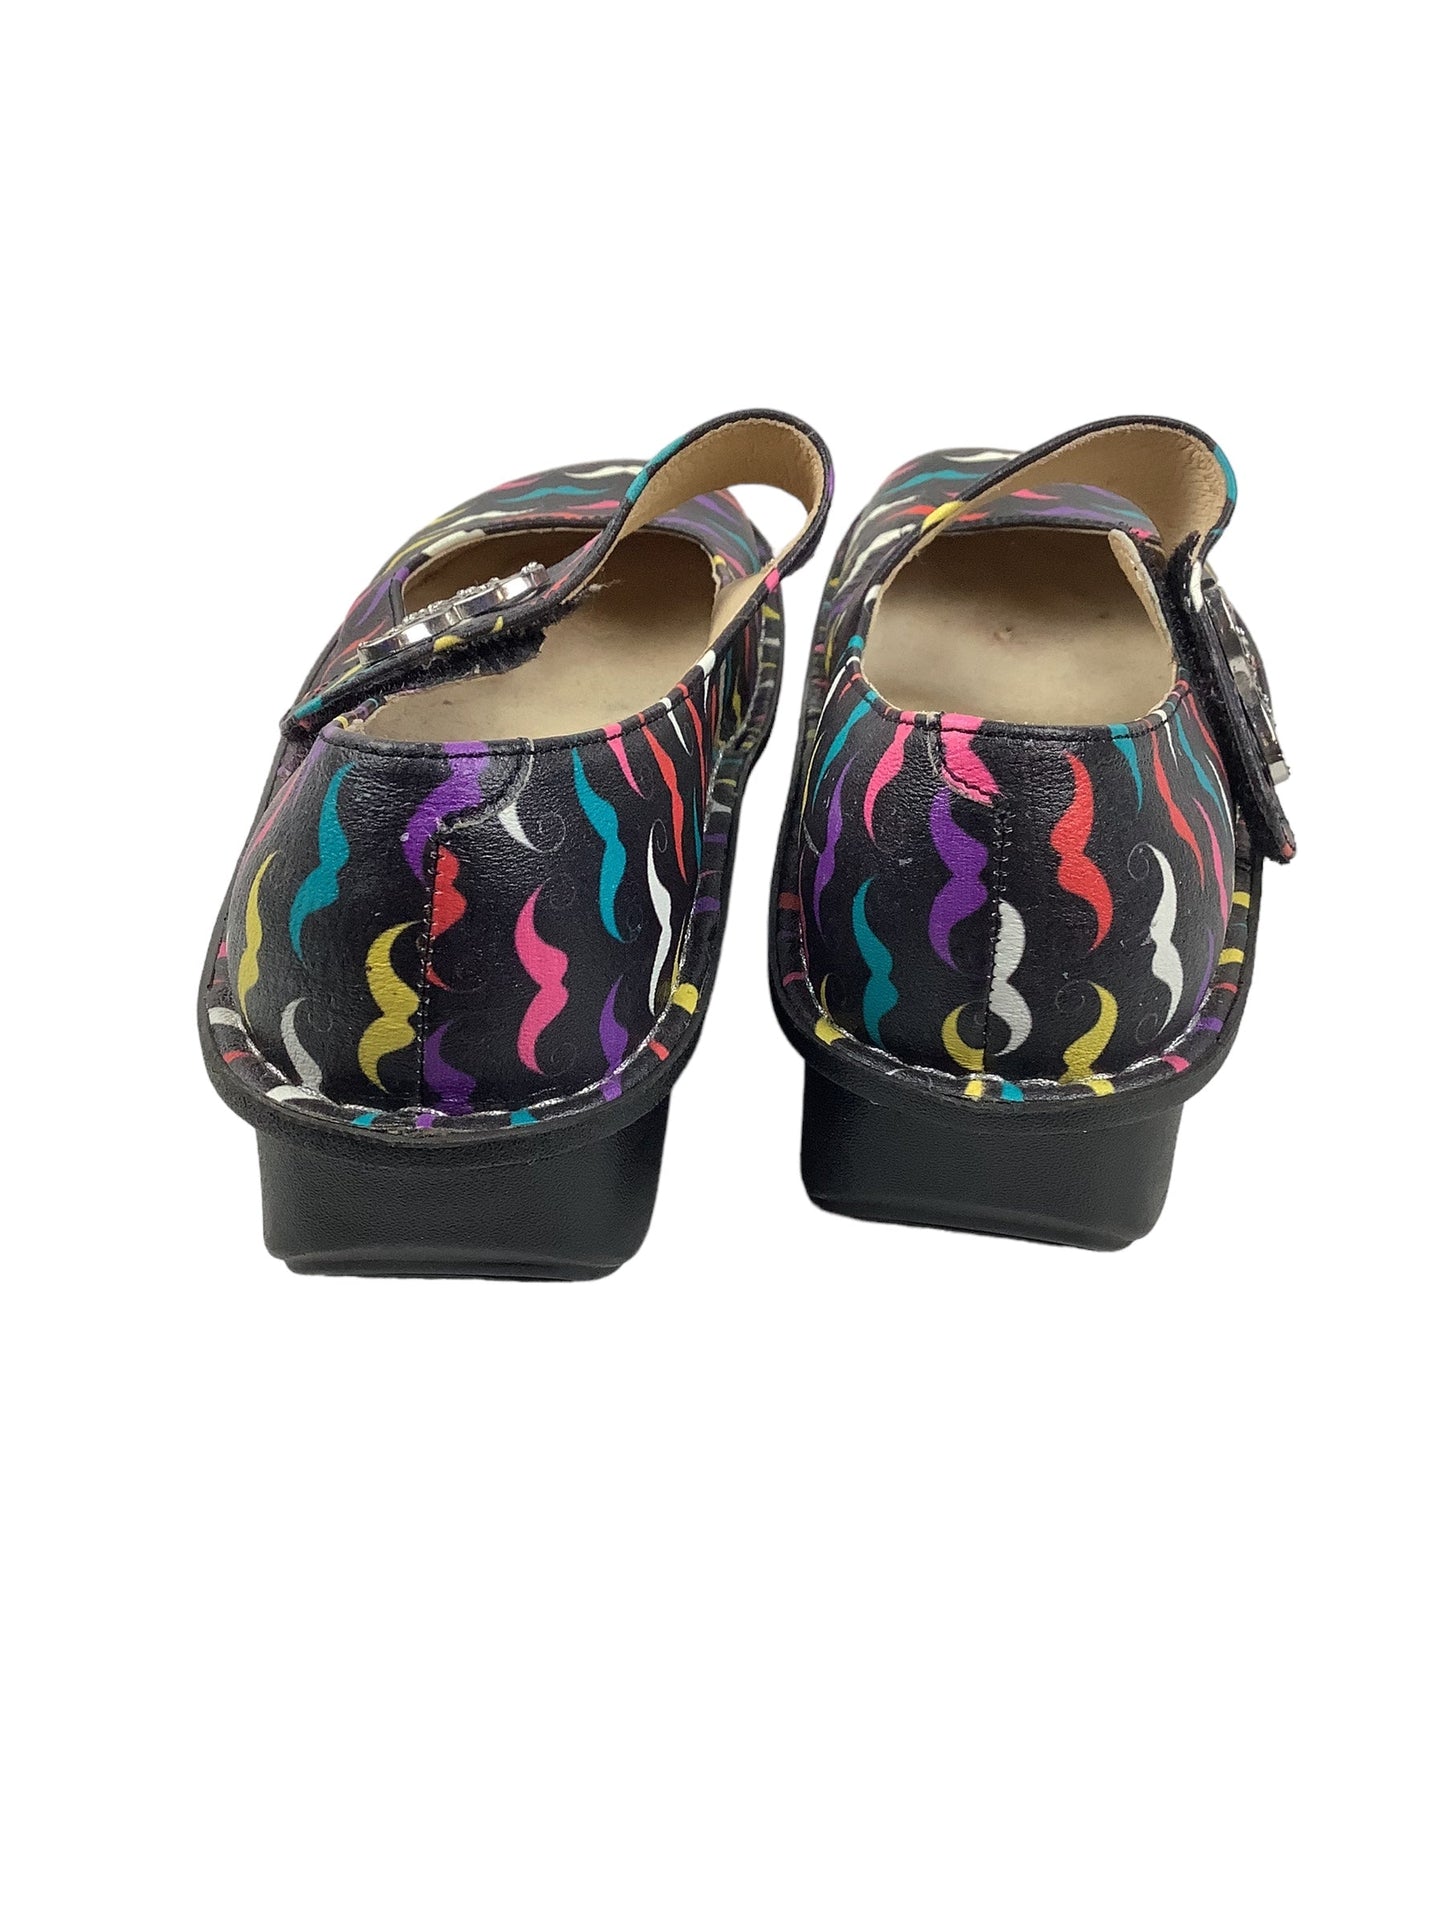 Multi-colored Shoes Flats Alegria, Size 9.5